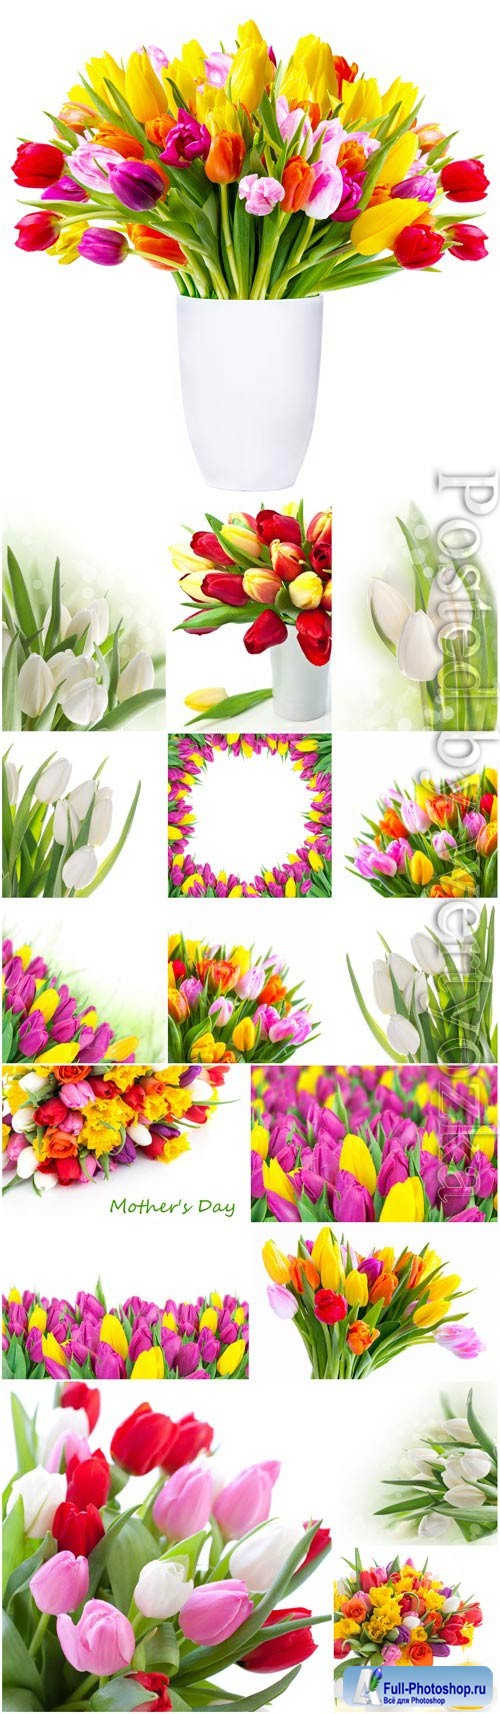 Tulips of different varieties stock photo